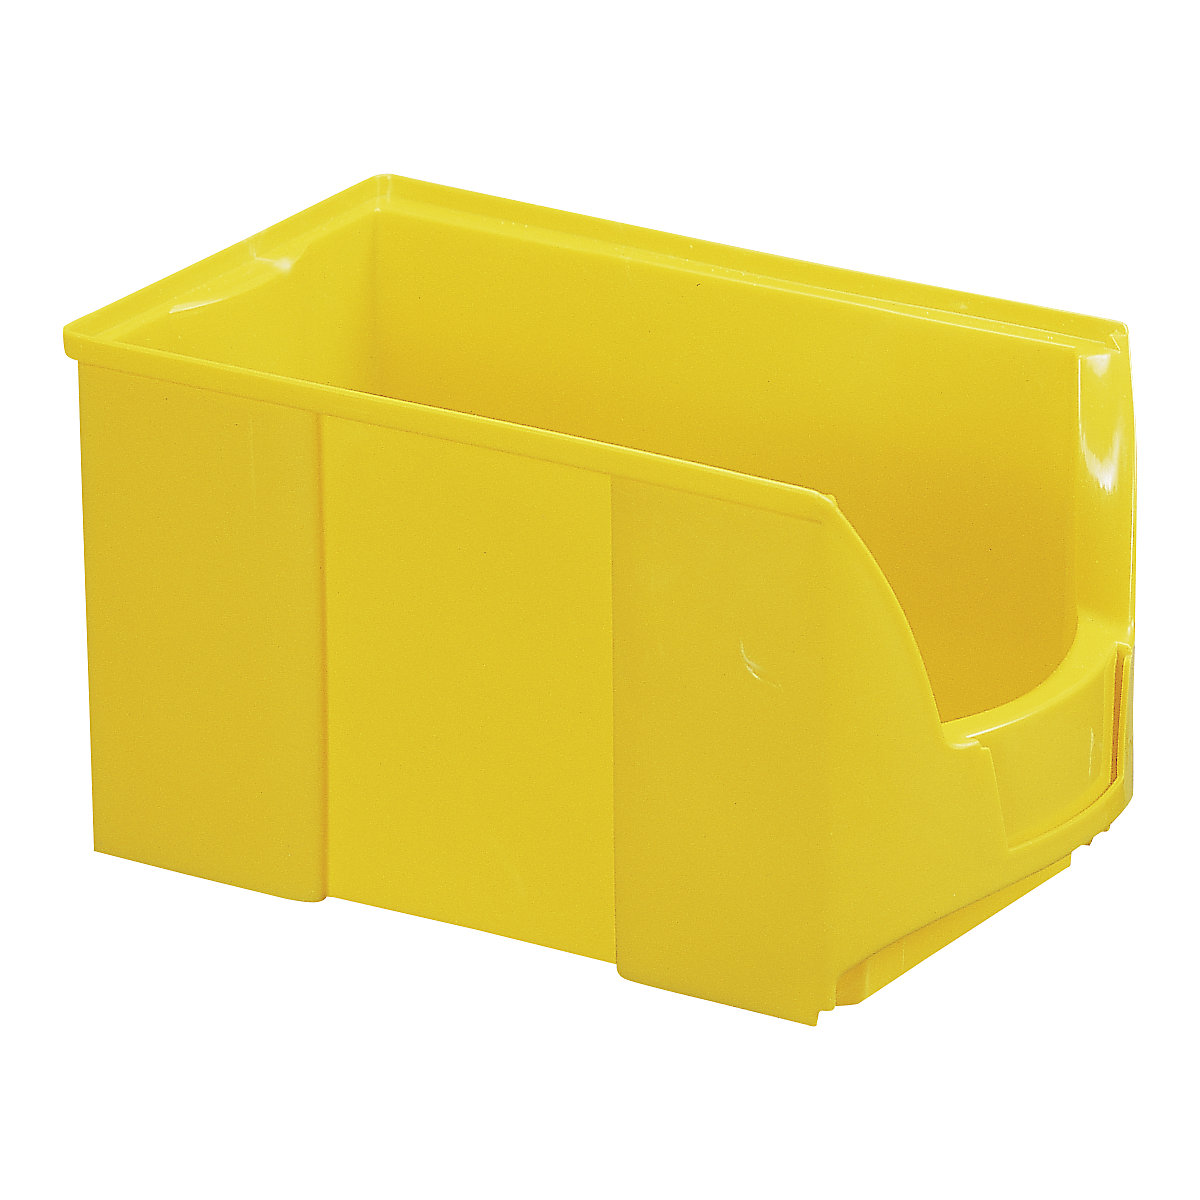 FUTURA-magazijnbak van polyethyleen, l x b x h = 360 x 208 x 201 mm, VE = 8 stuks, geel